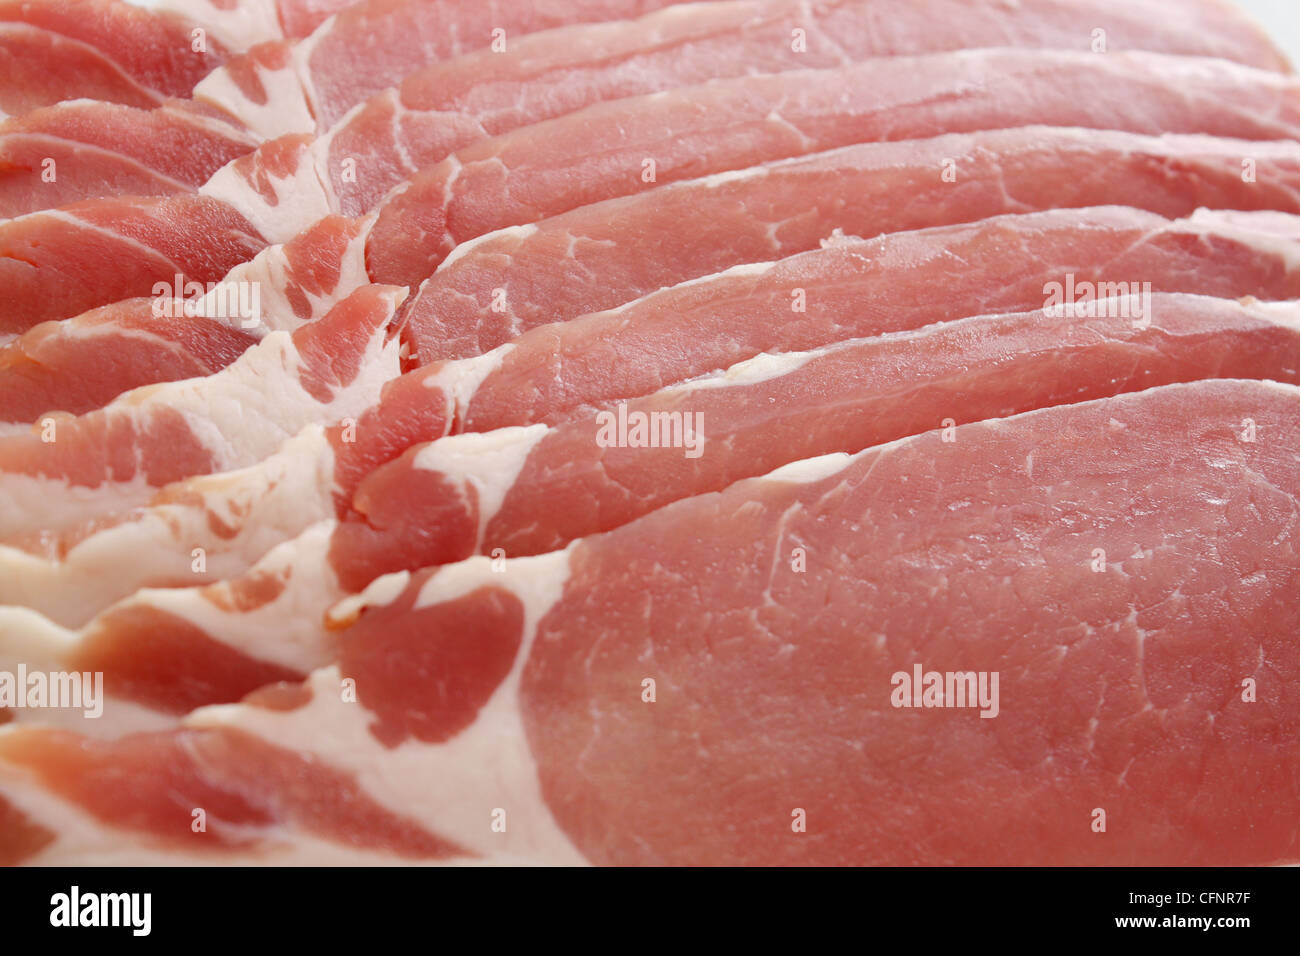 Bacon Foto de stock